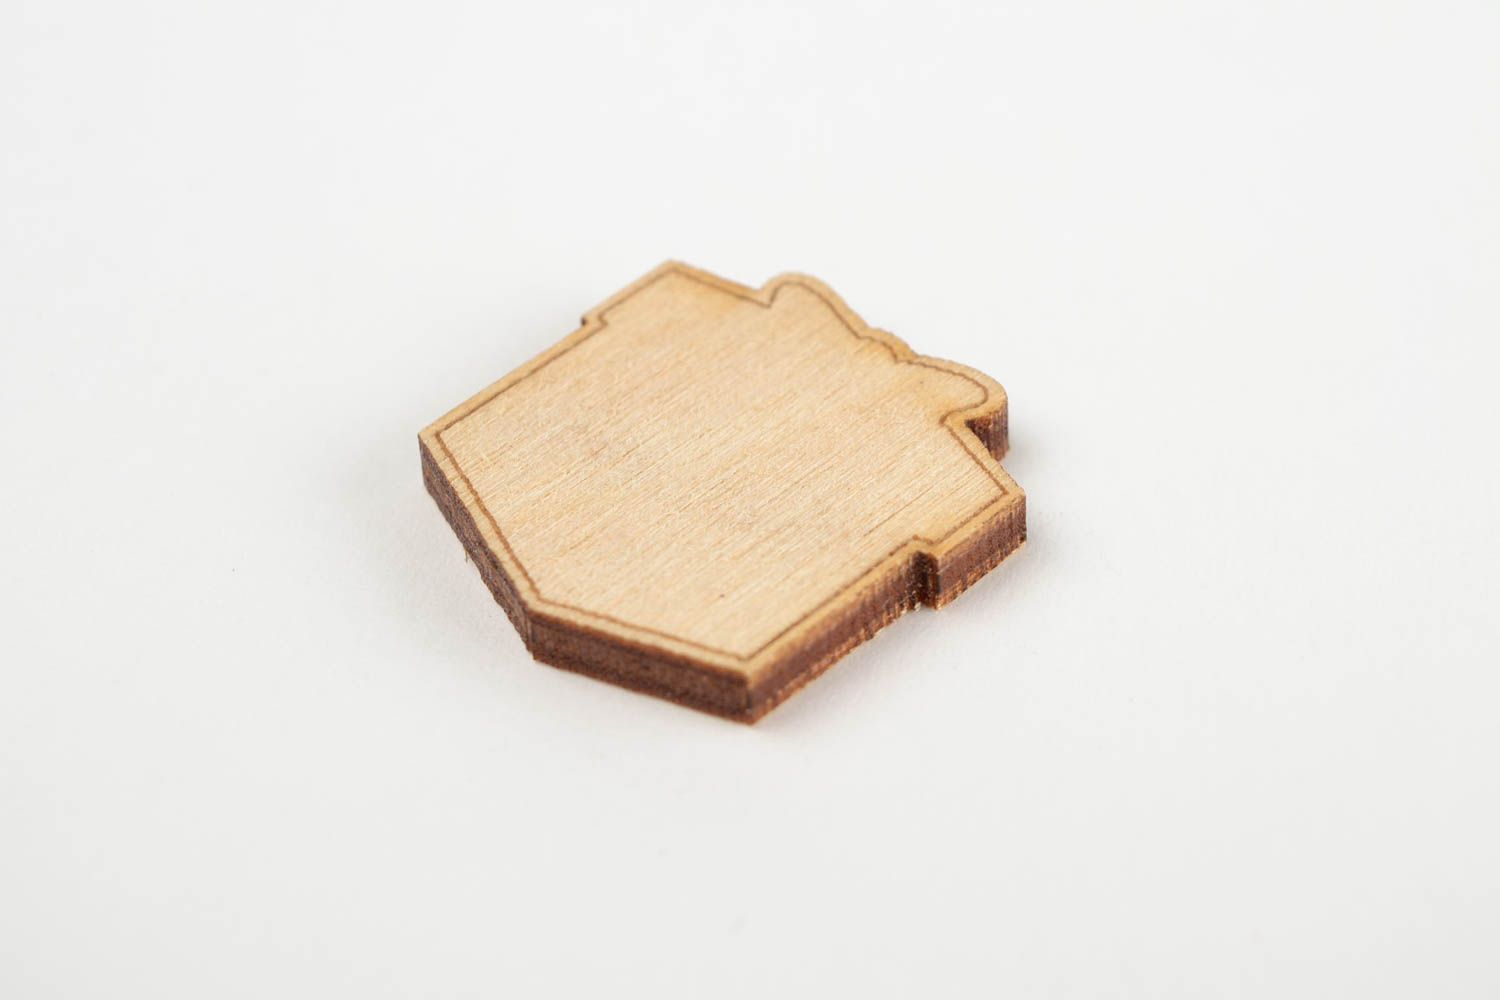 Handmade plywood accessory cute decorative element blank for creativity photo 3